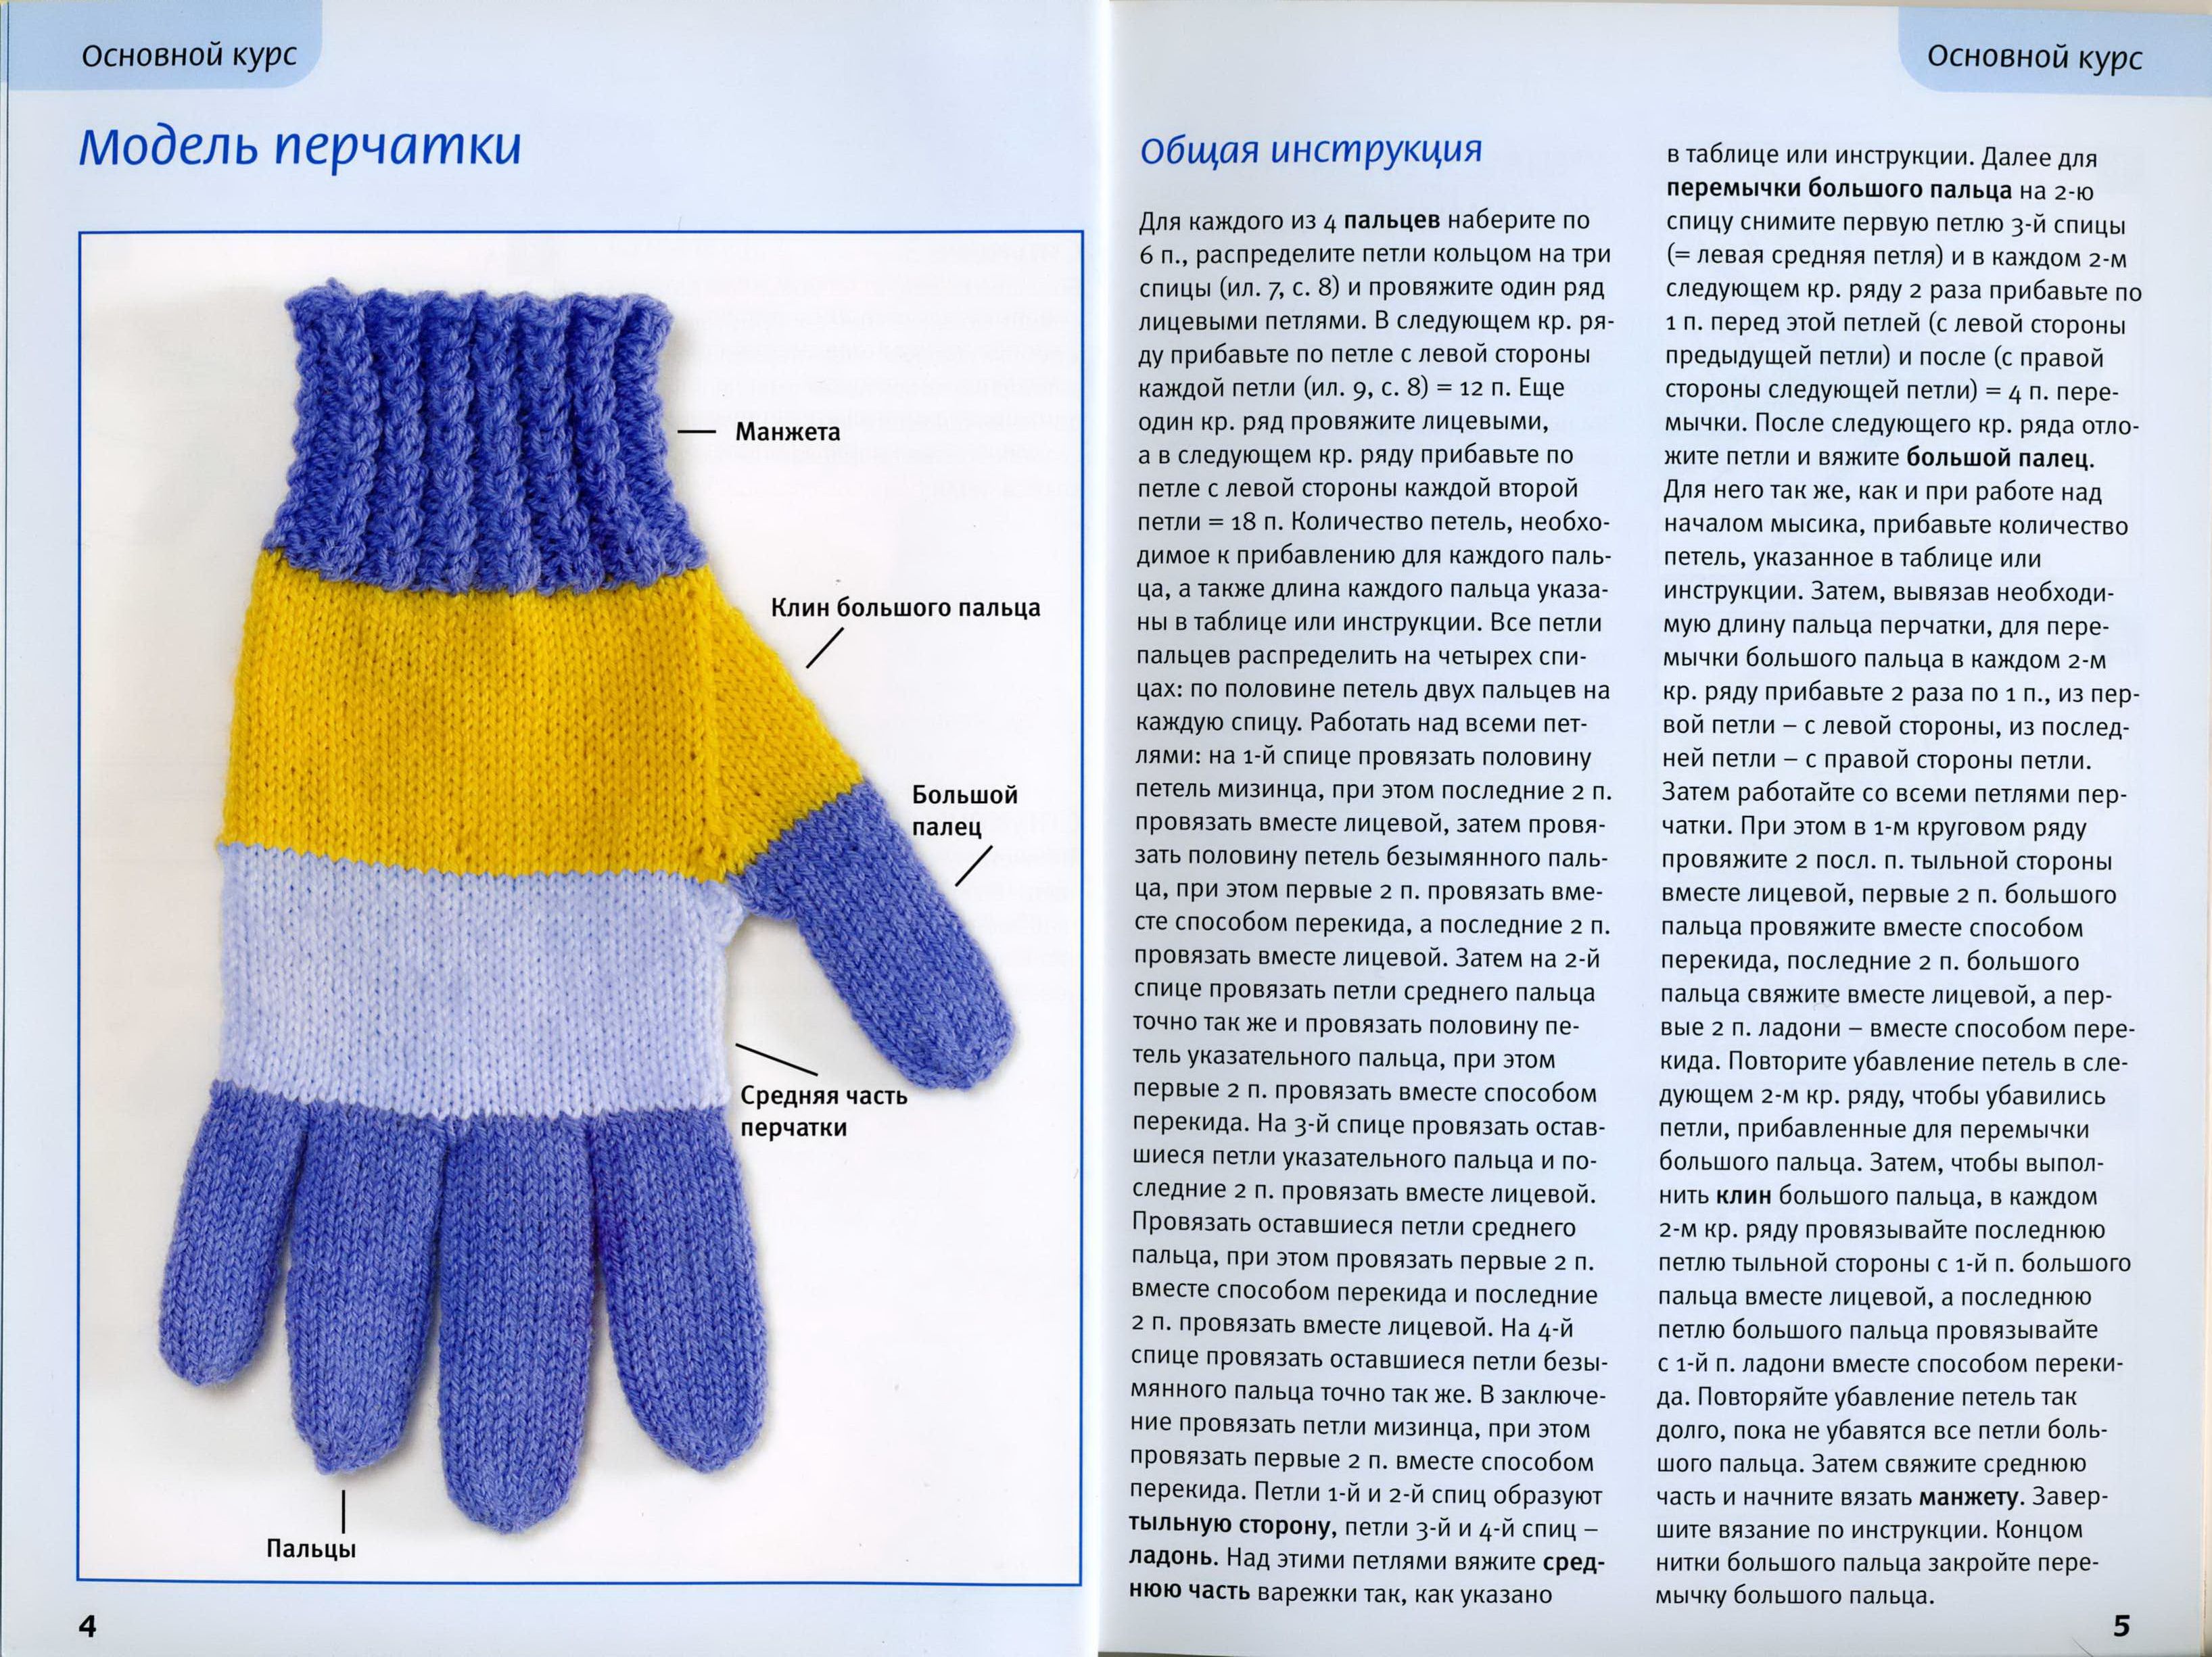 Описание вязания перчаток